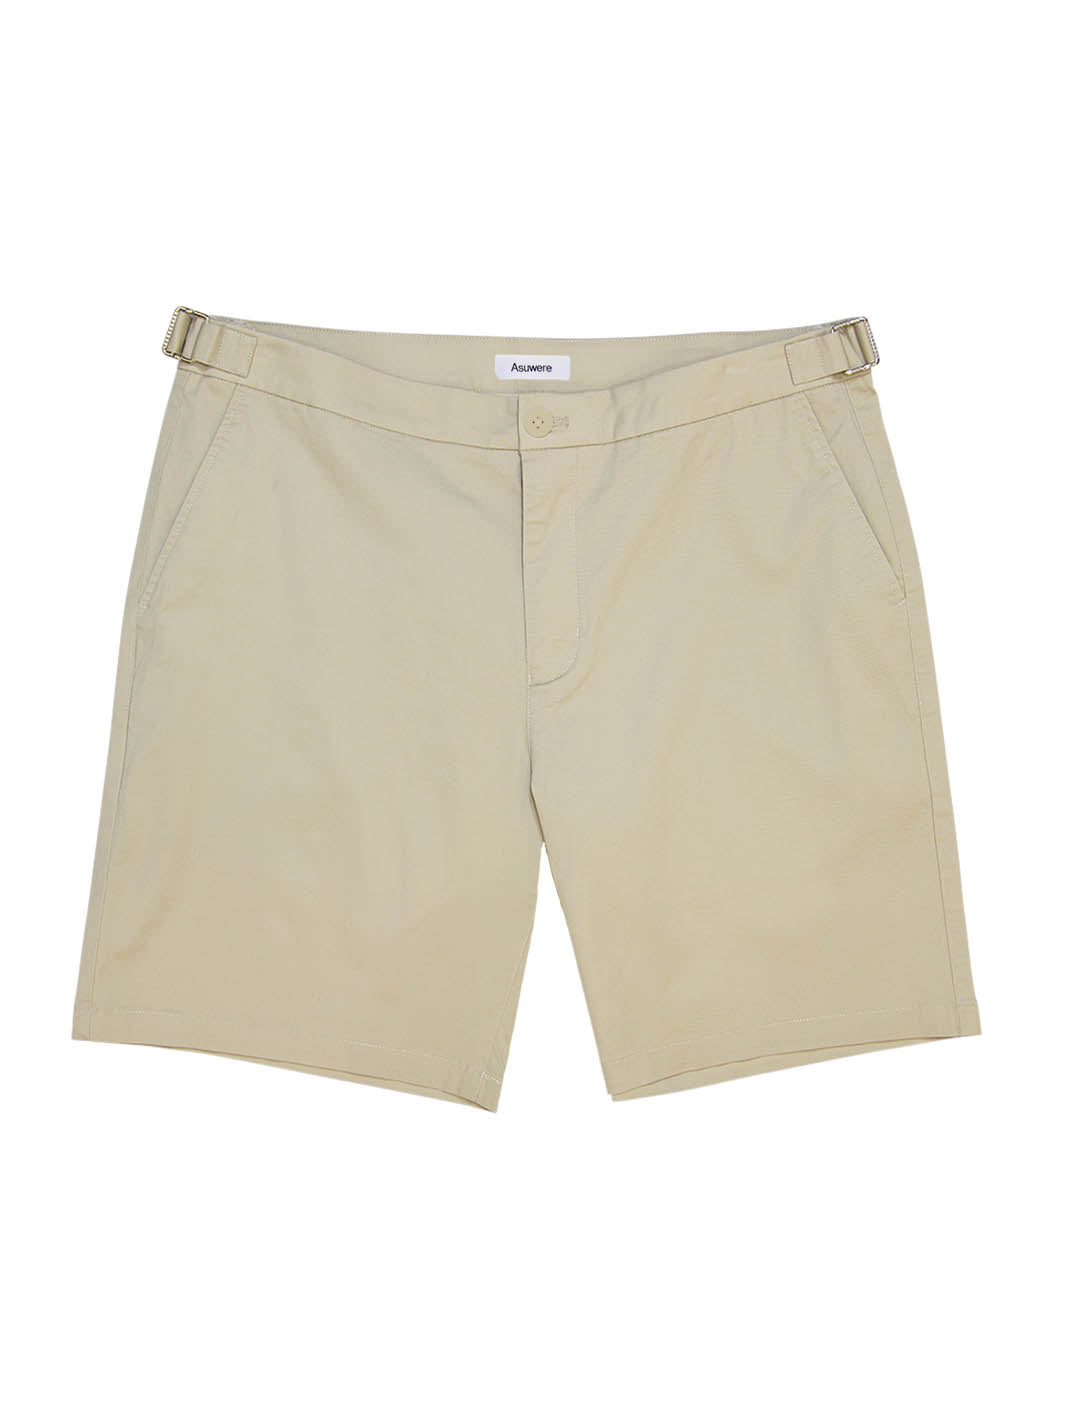 Essential Twill Short, Tan - Men's Cotton Shorts | Asuwere